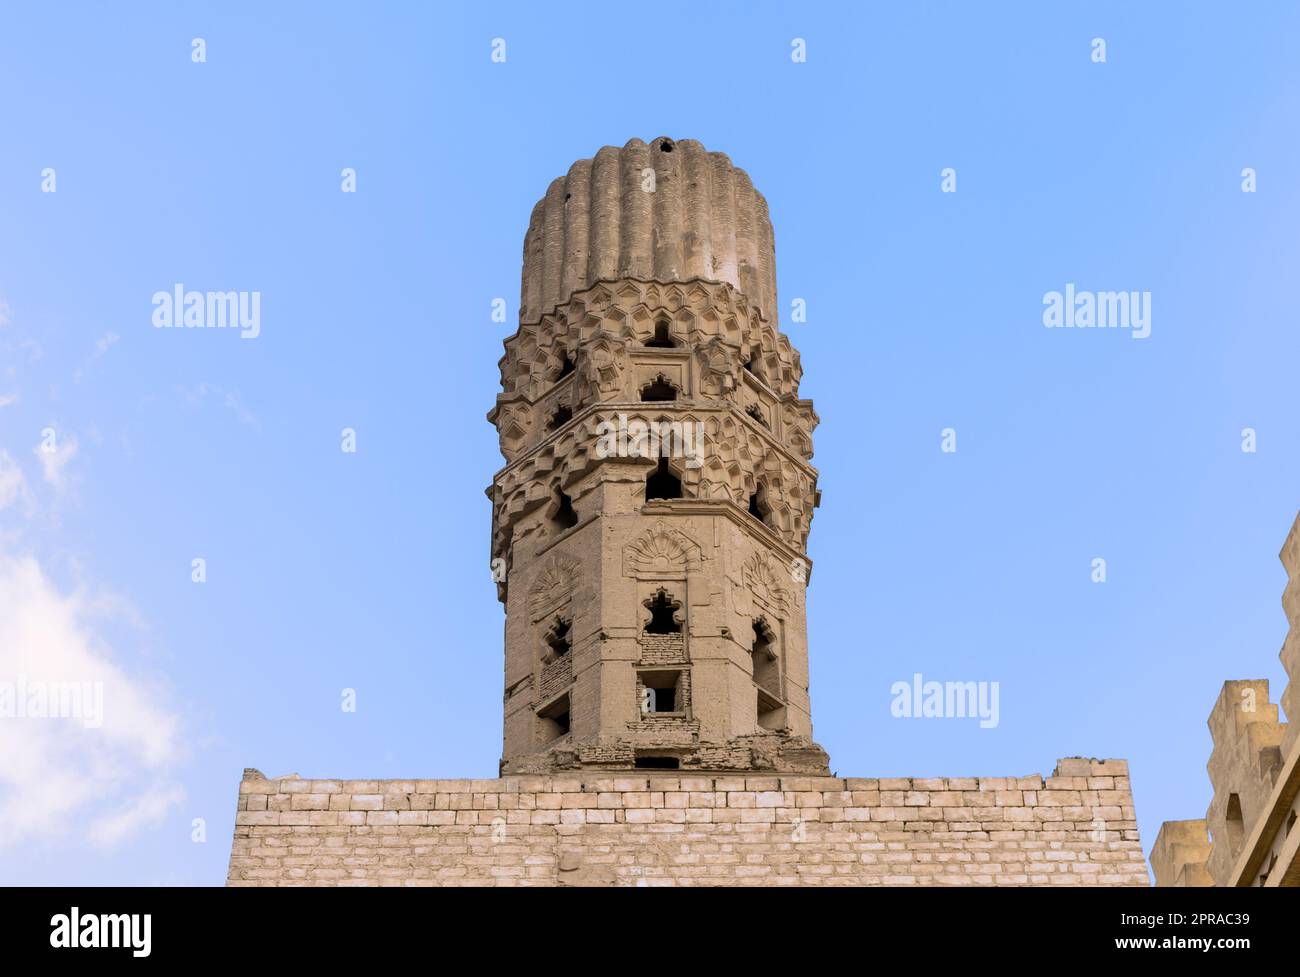 Minaret of public historic Al Hakim Mosque - The Enlightened Mosque, Moez Street, Cairo, Egypt Stock Photo